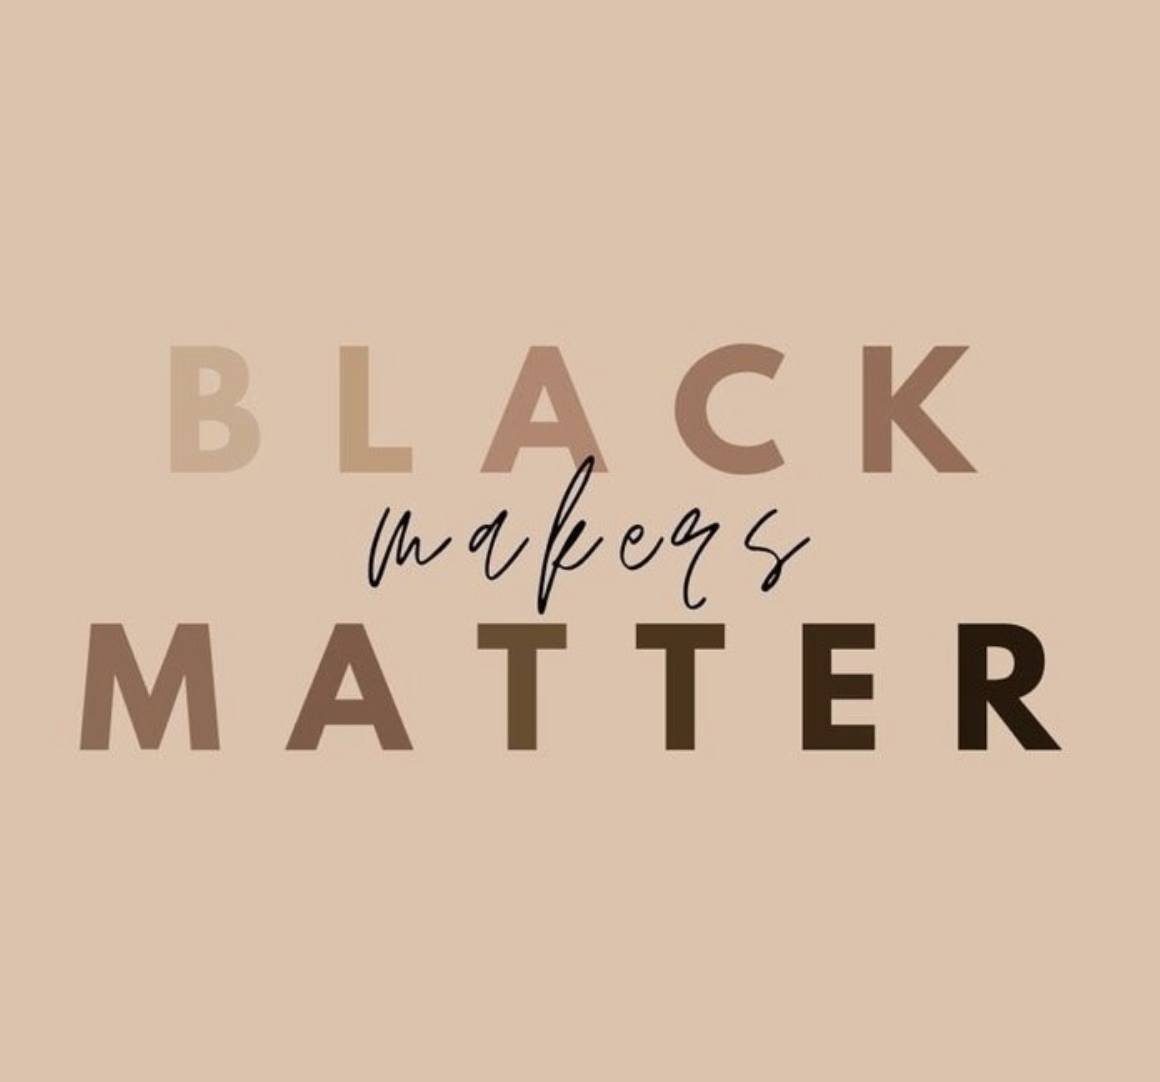 Black Makers Matter